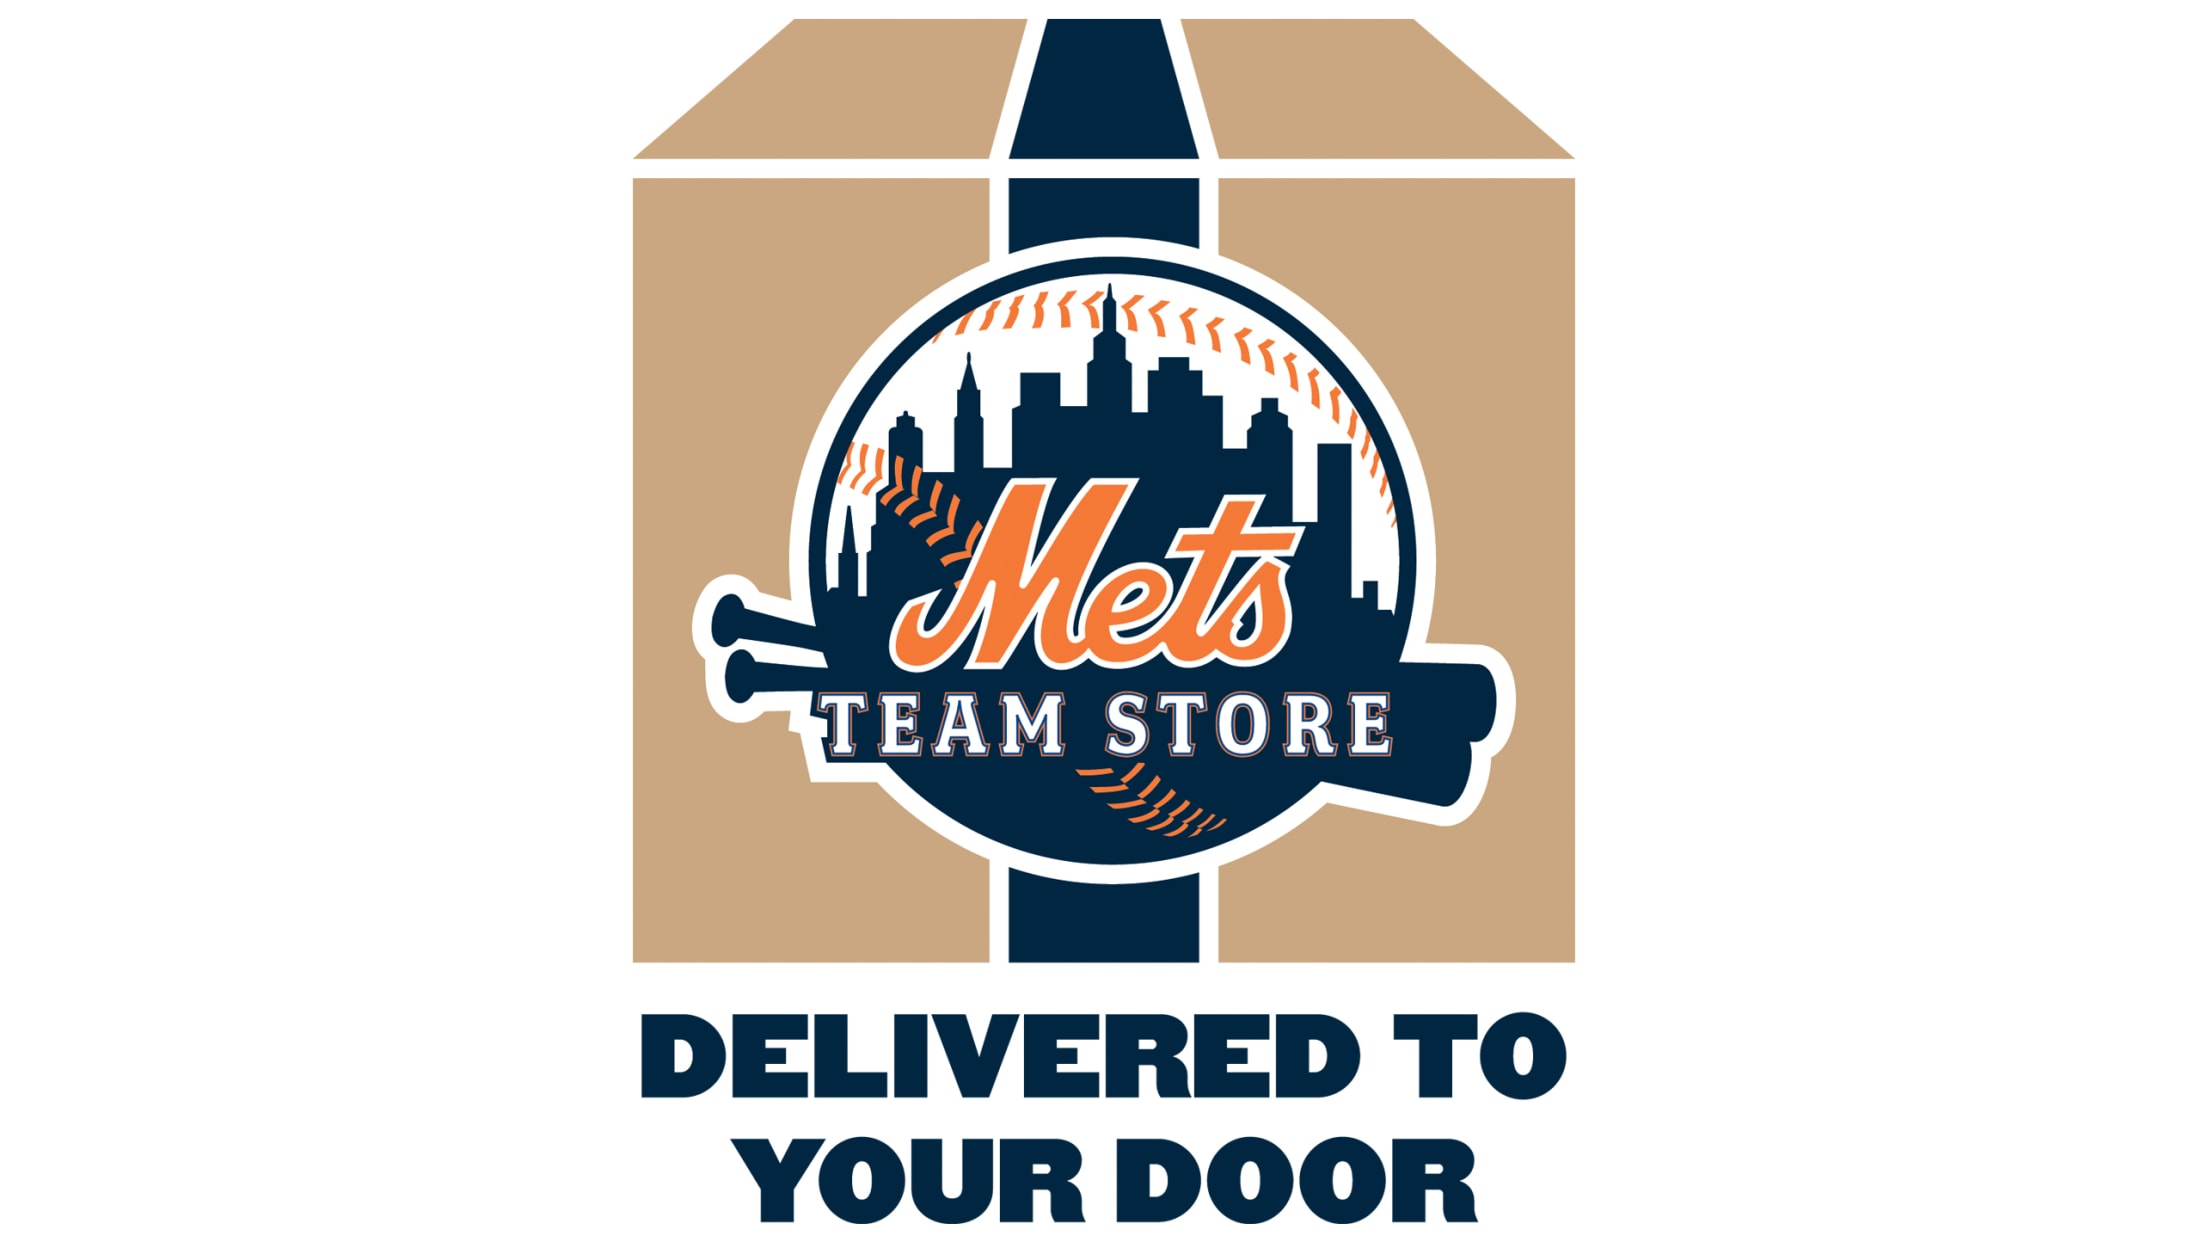 MLB New York Mets Toddler Jersey 2T Blue Genuine Merchandise